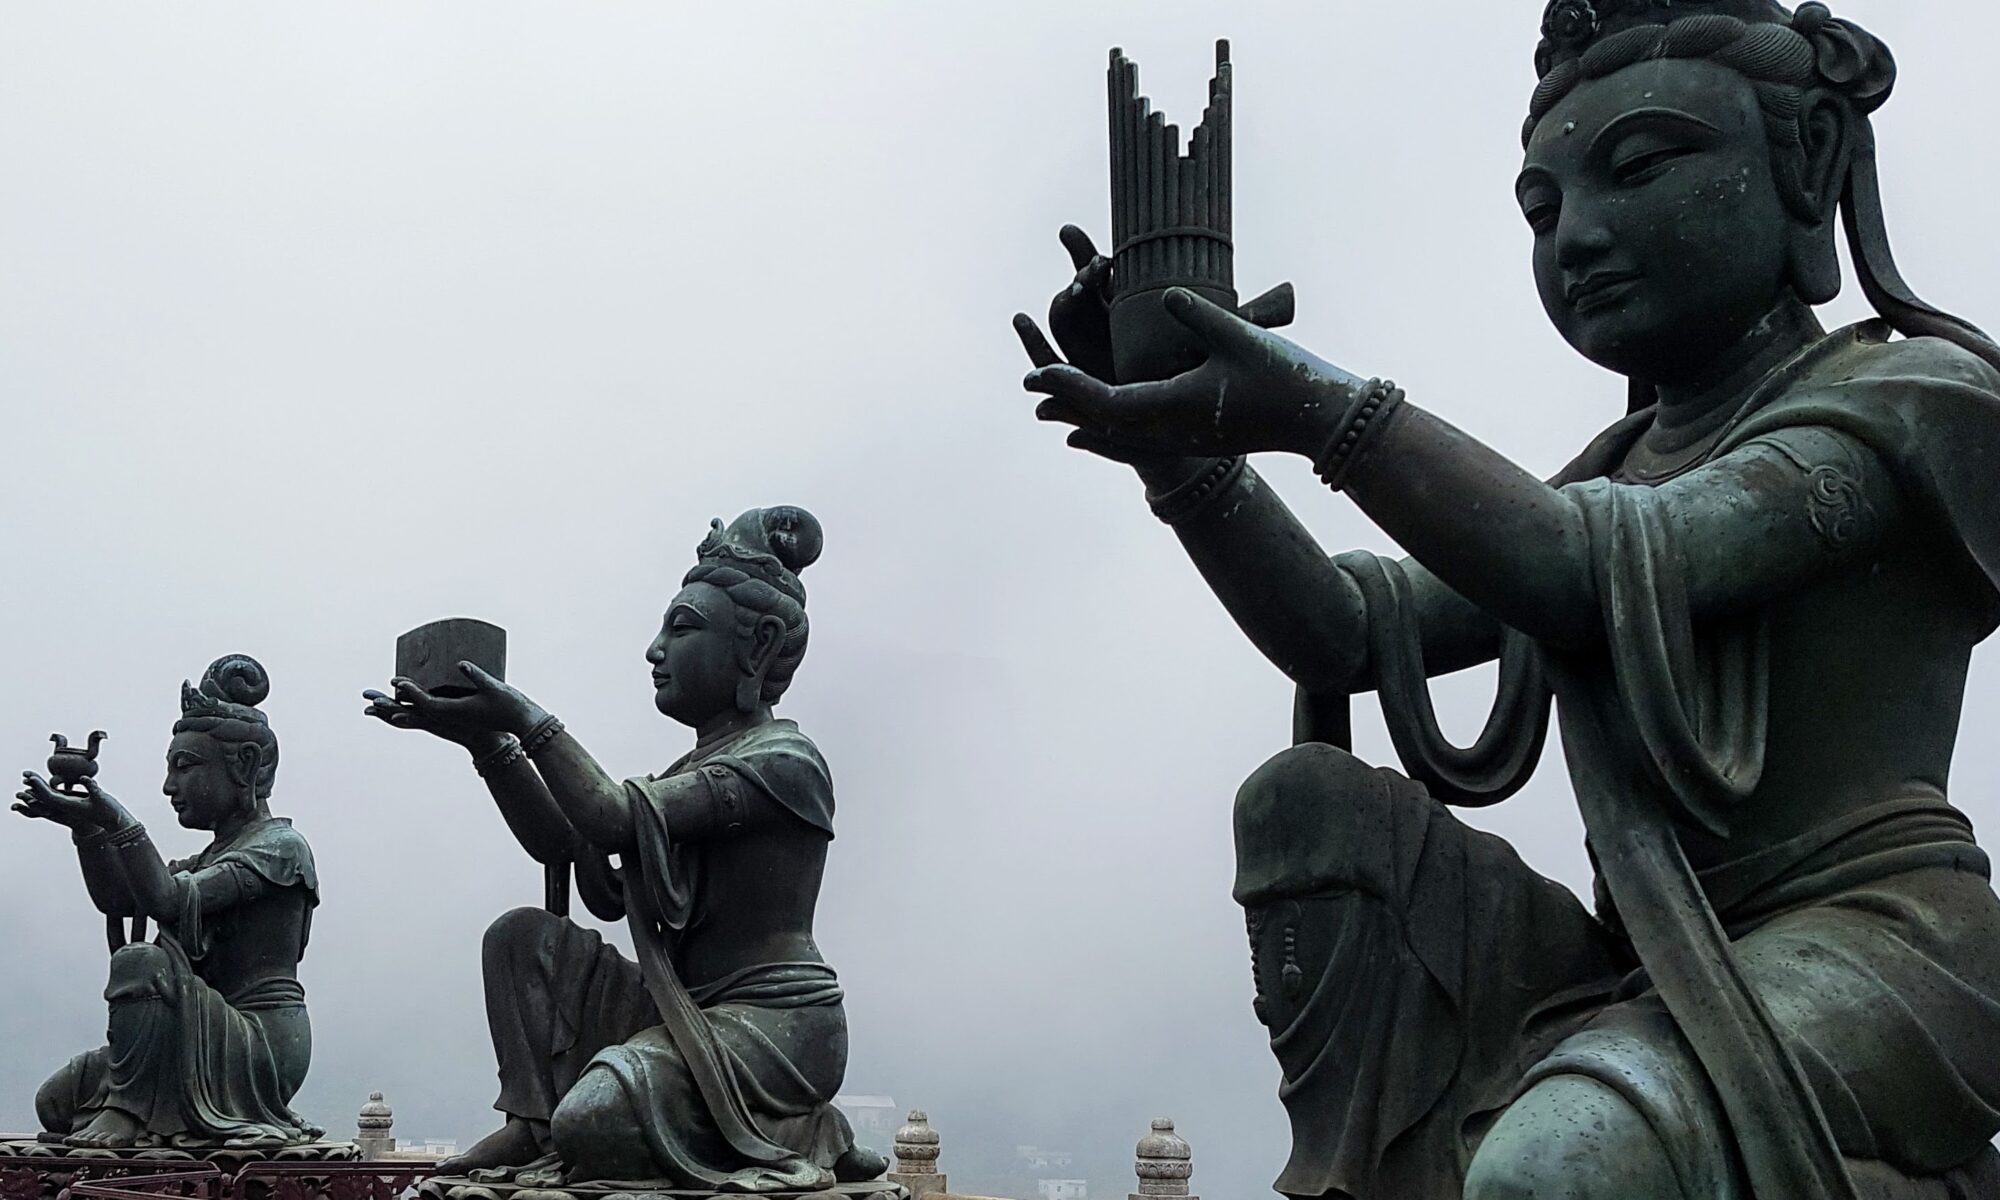 Image – ‘Big Buddha’ - Hong Kong - August 2016